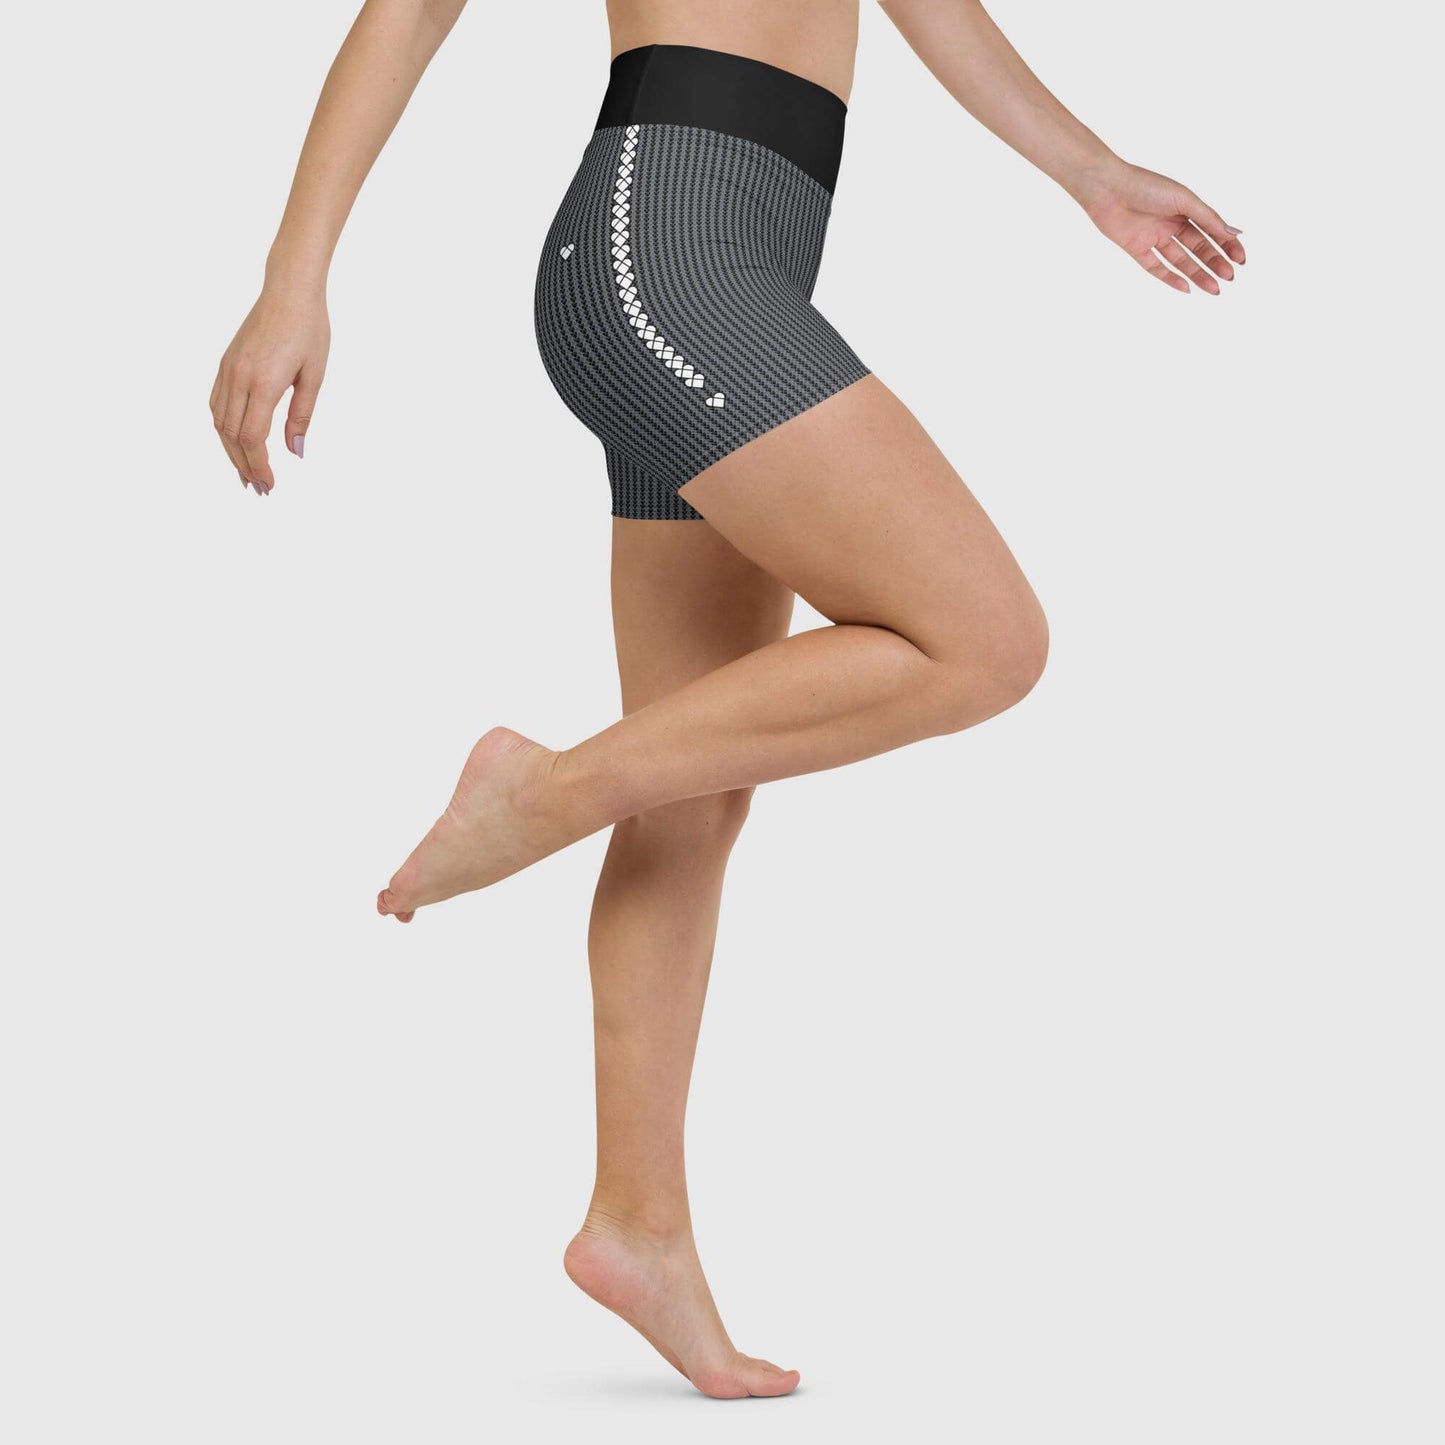 Distinctive logo stripe detail on black raised waistband yoga shorts